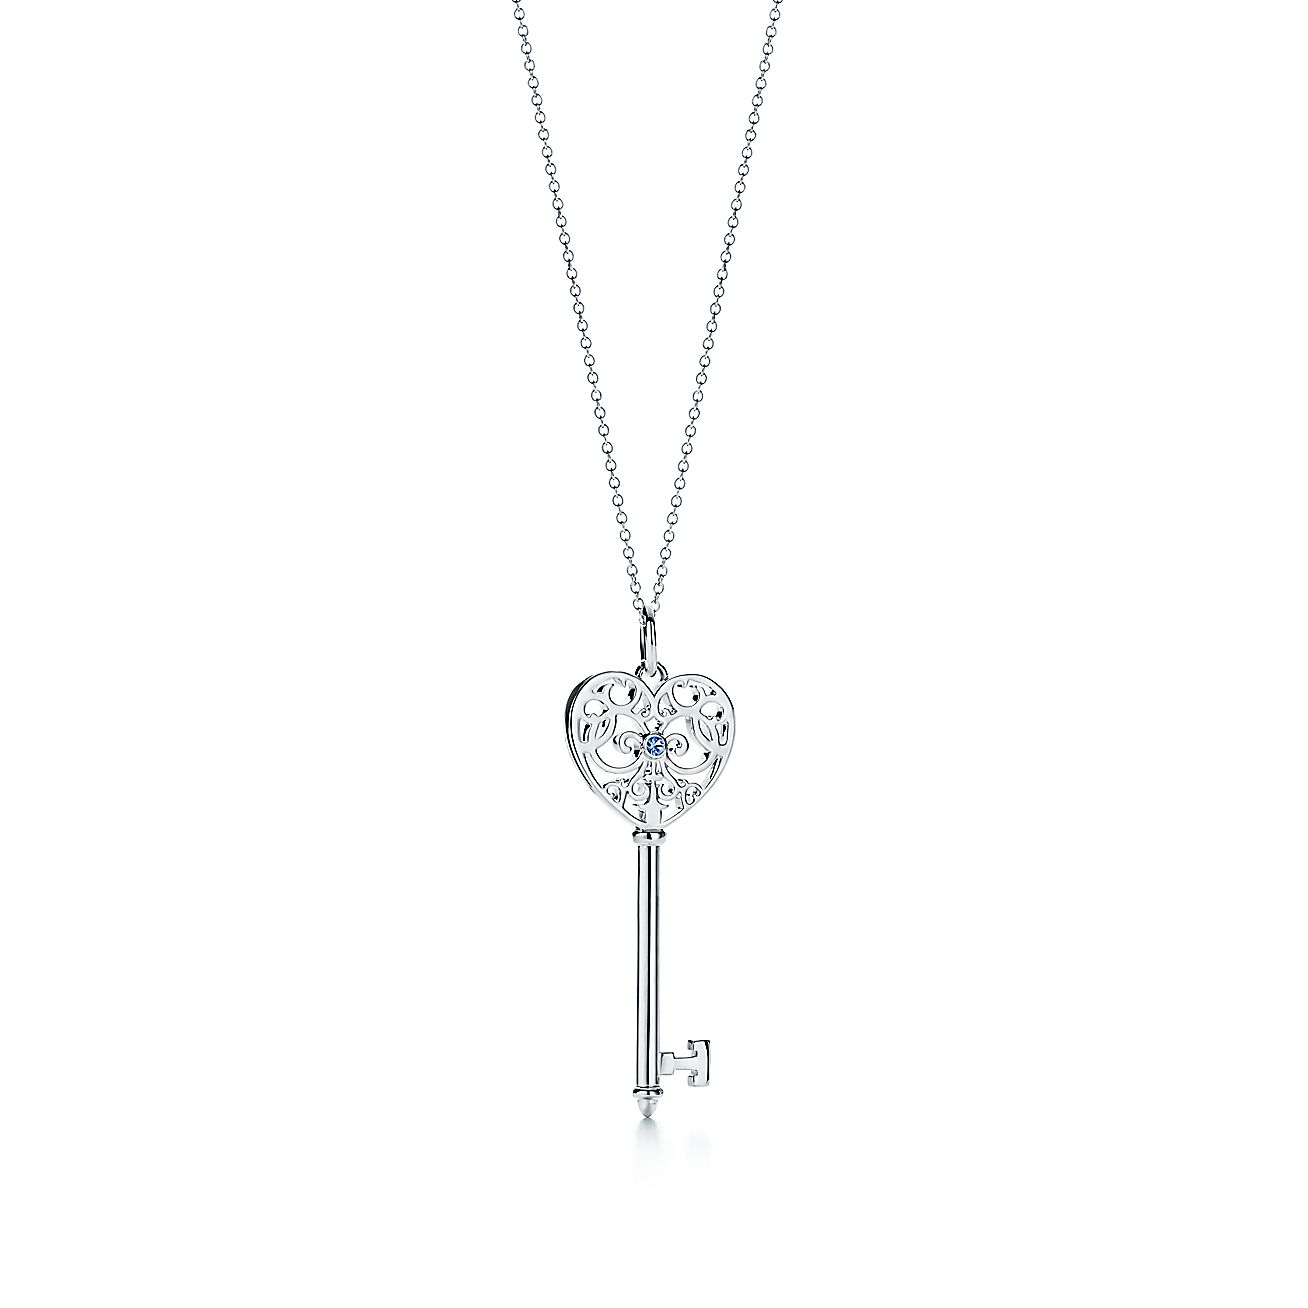 Tiffany Keys heart key pendant in 18k rose gold, mini.